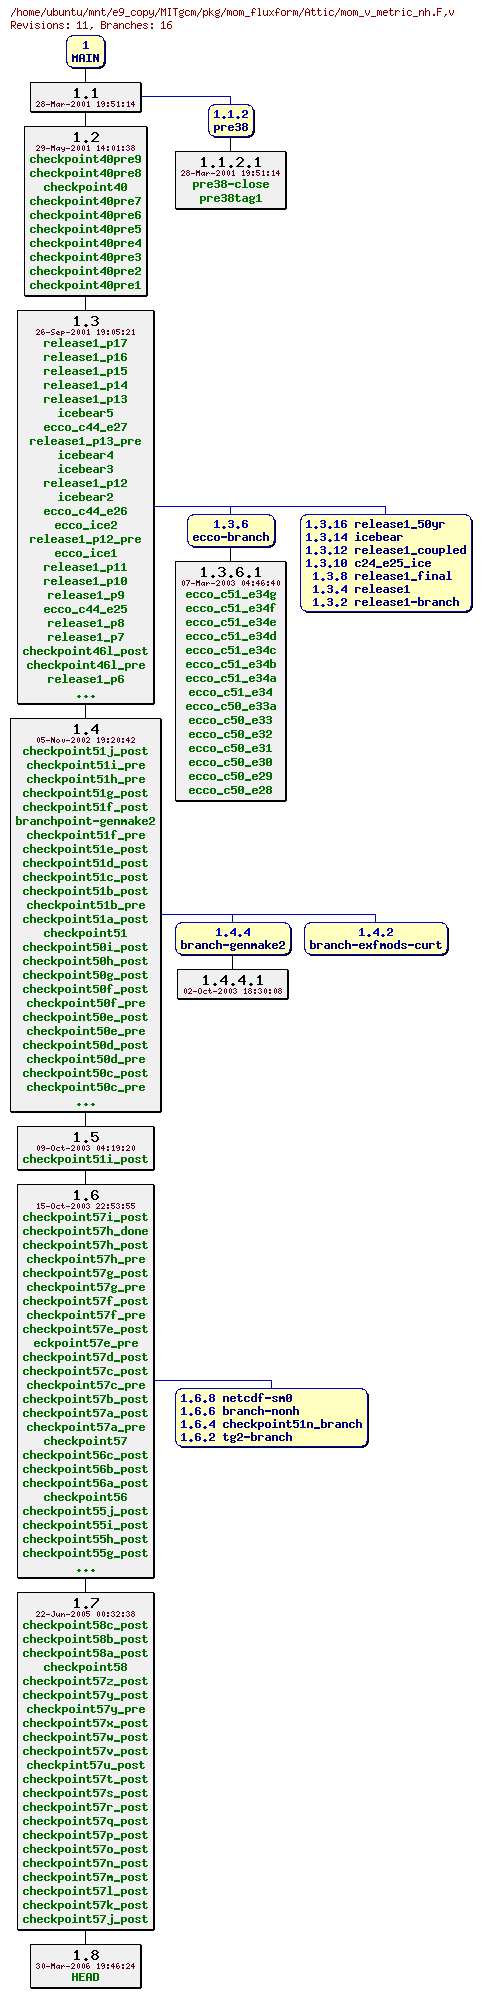 Revisions of MITgcm/pkg/mom_fluxform/mom_v_metric_nh.F